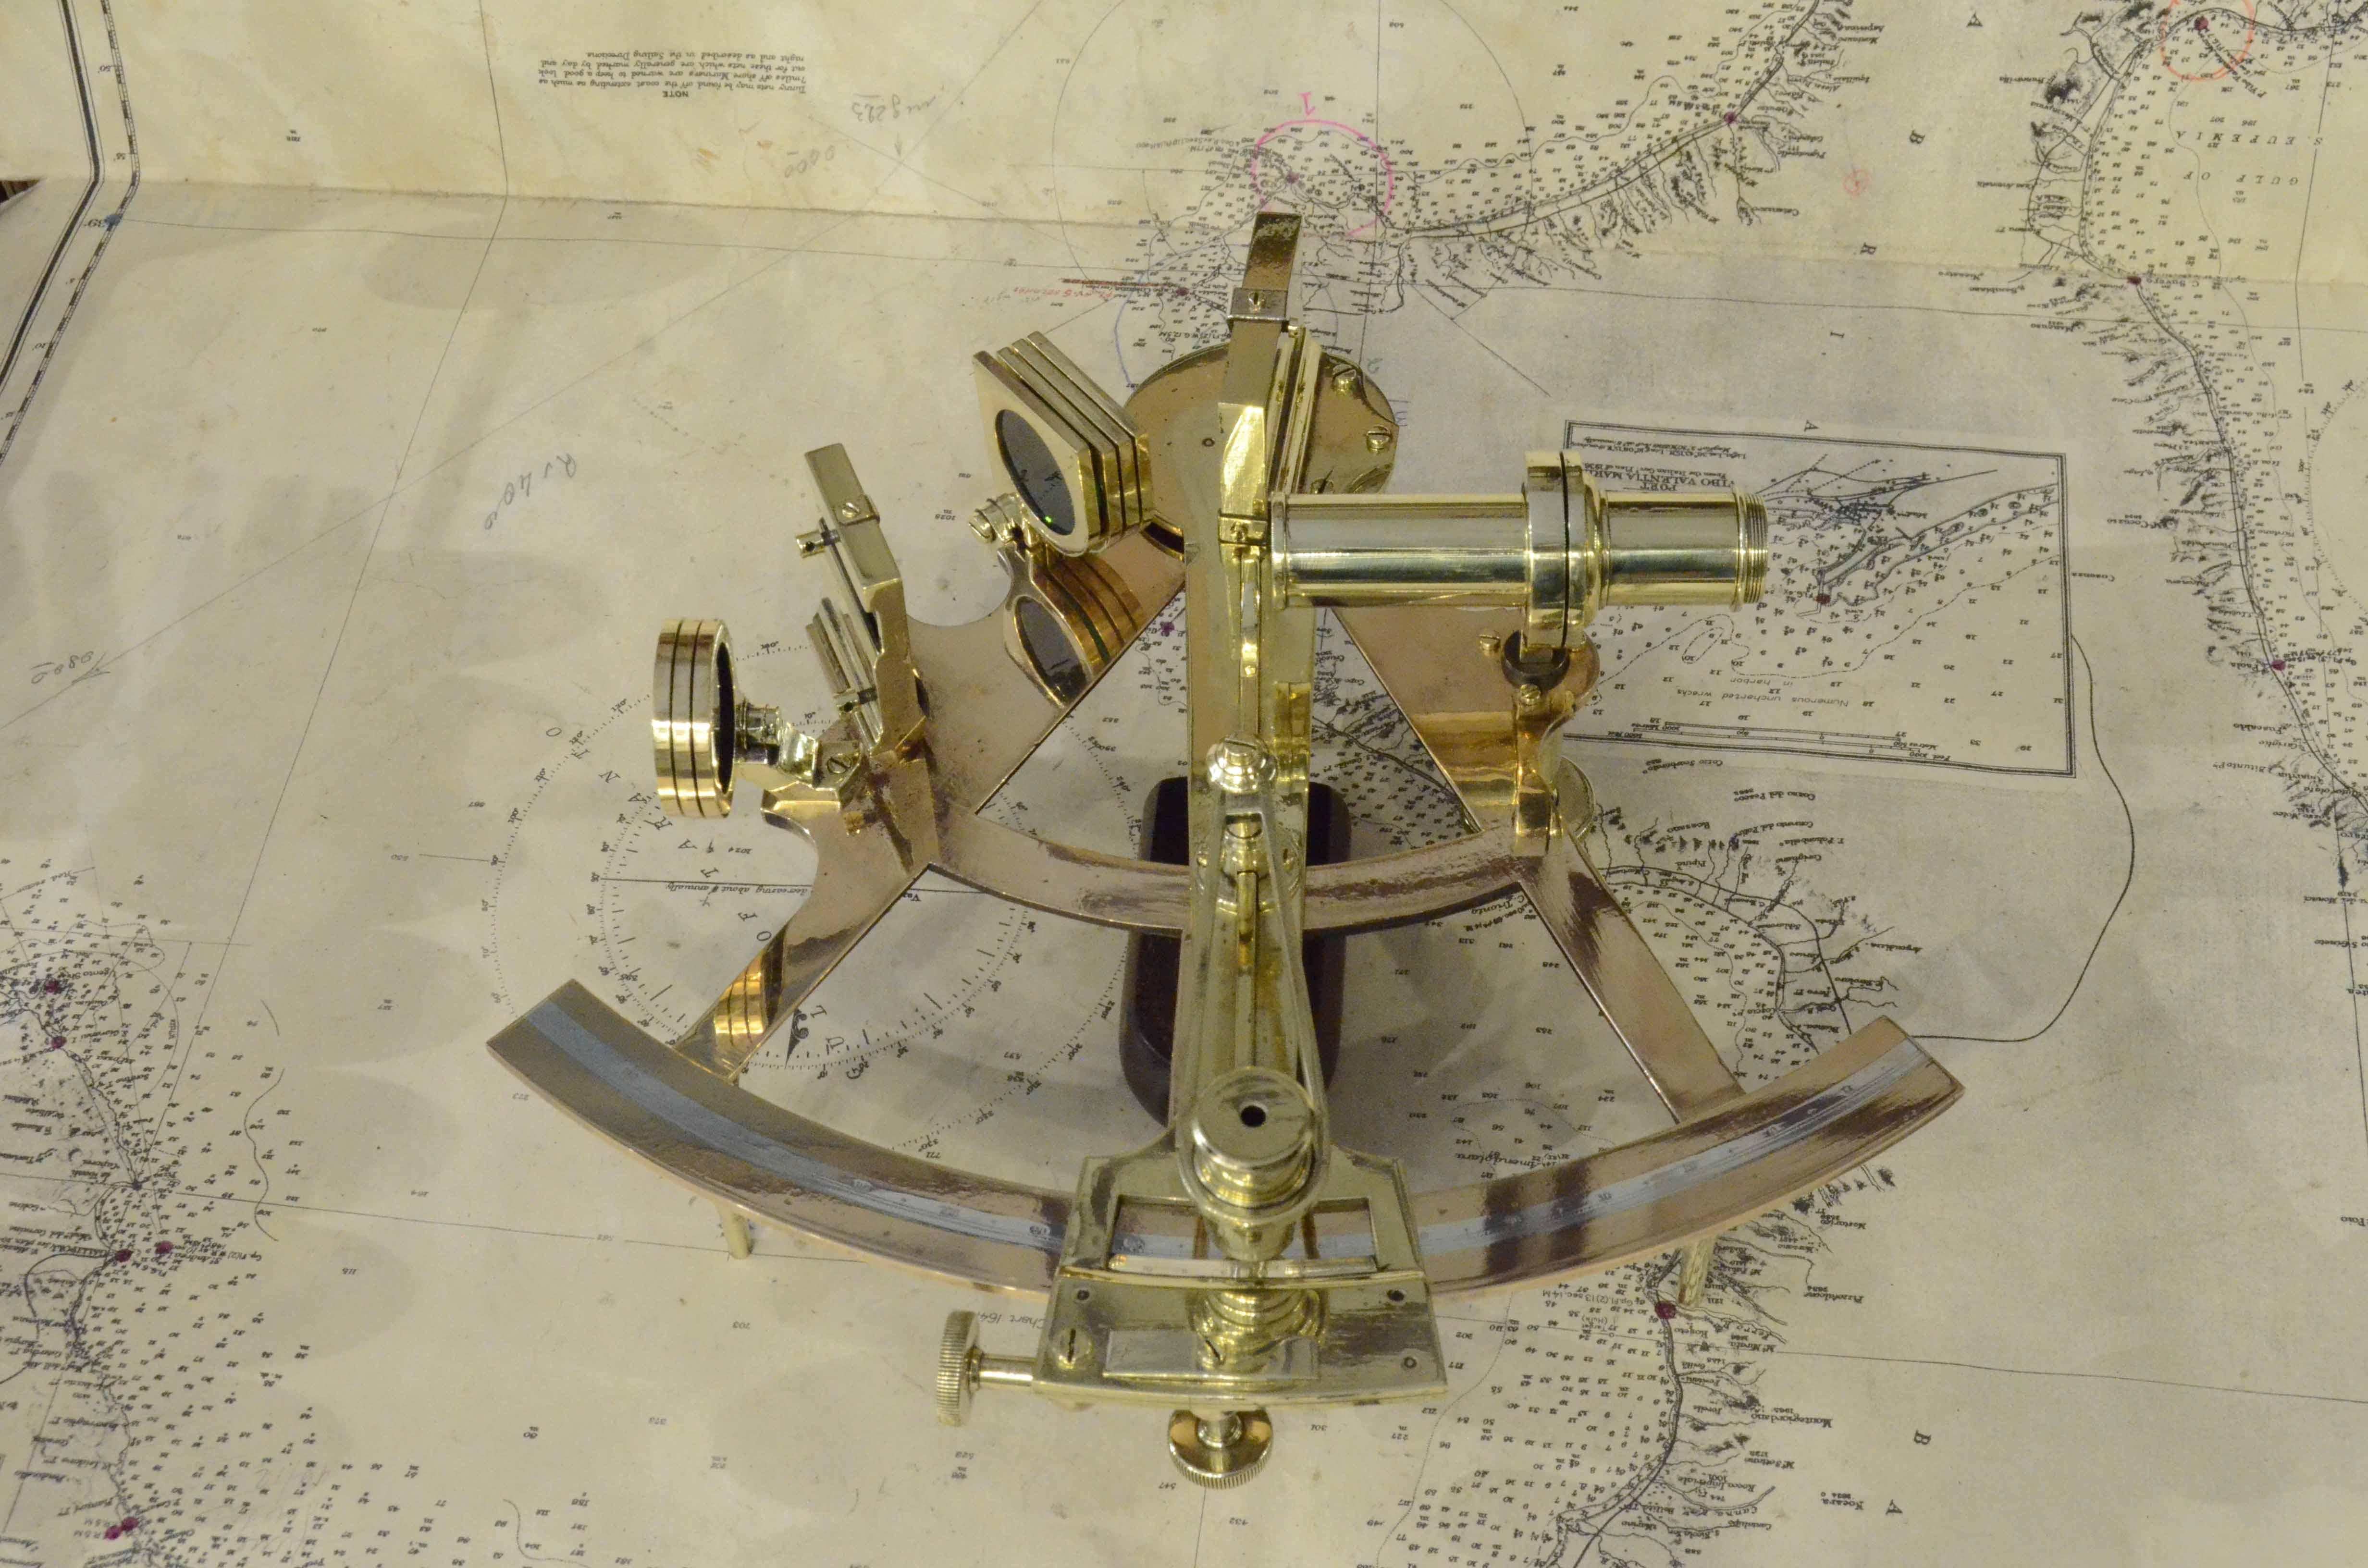 Late 19th Century 1875s Brass Sextant Signed Negus New York Antique Marine Navigation Instrument